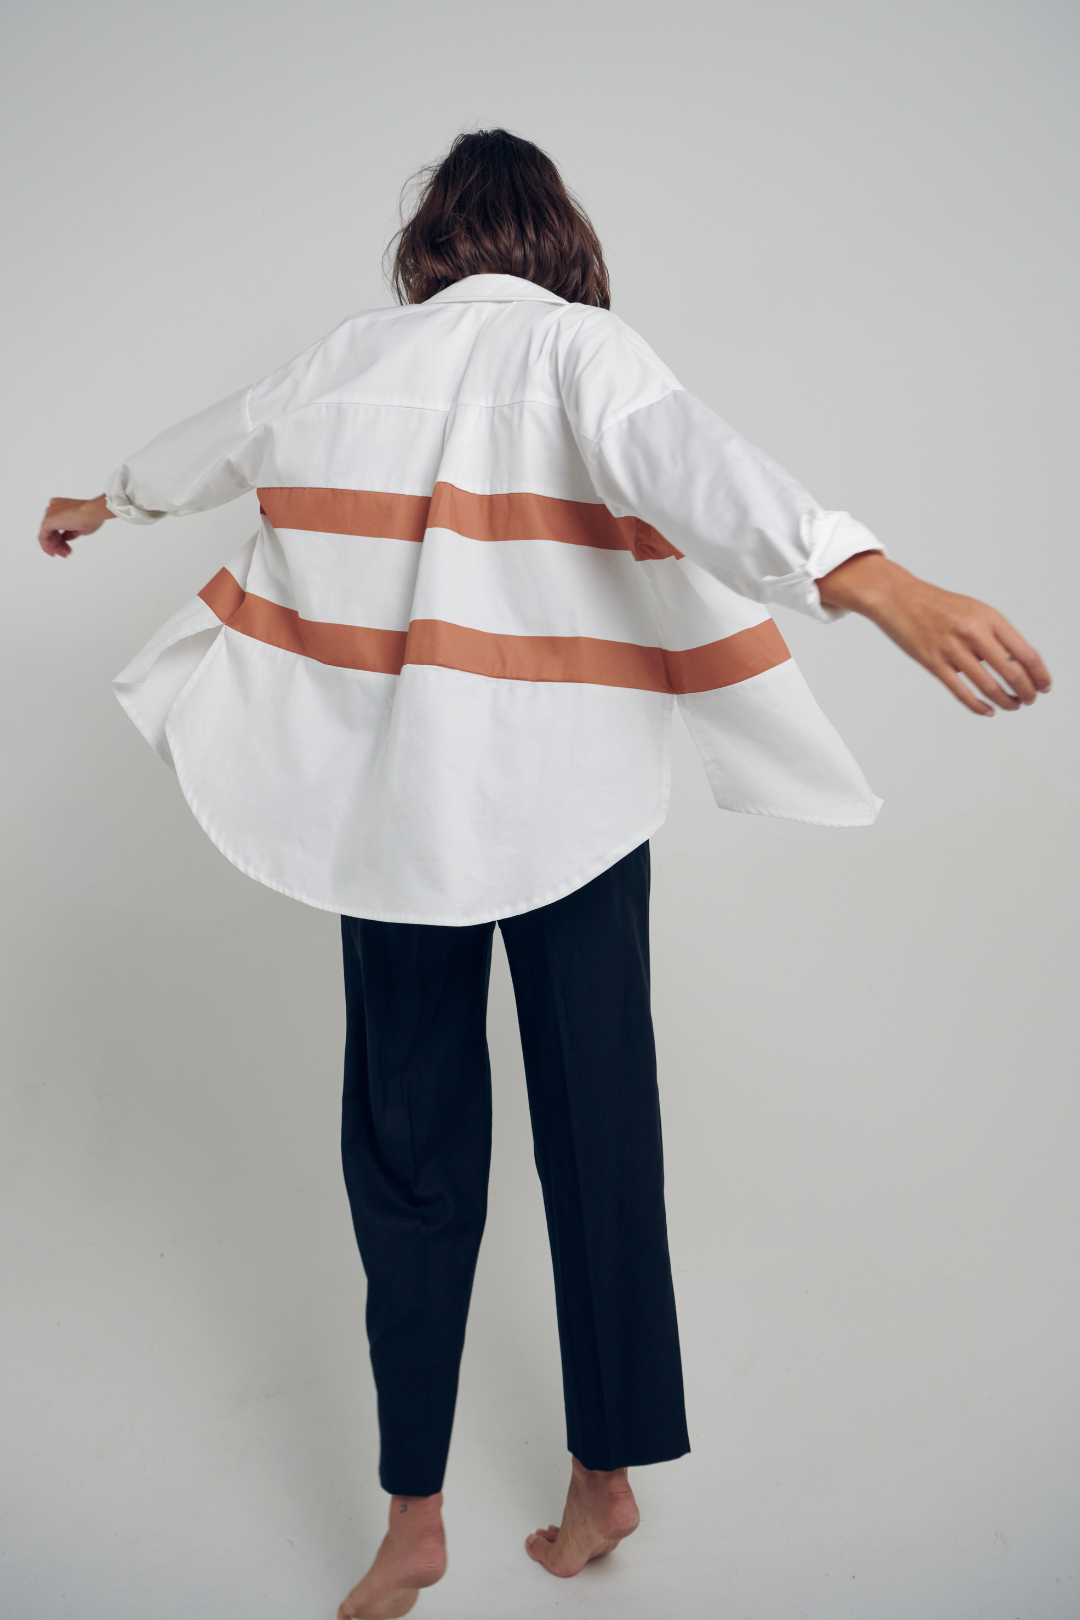 The Maria Anna Shirt: Italian Inspired Rust Striped